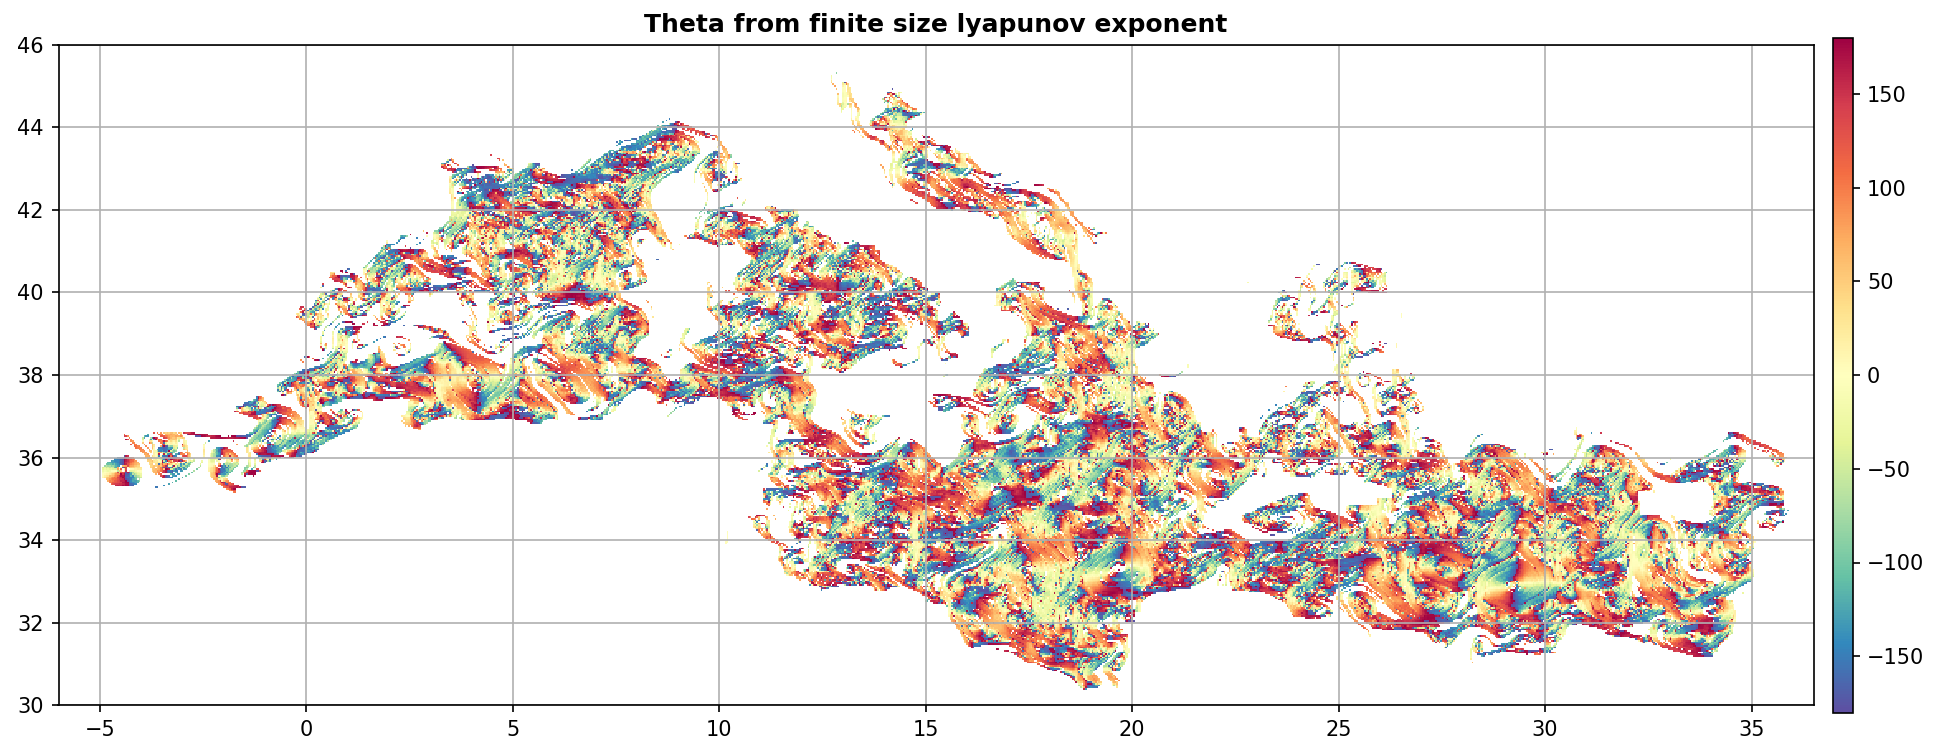 Theta from finite size lyapunov exponent